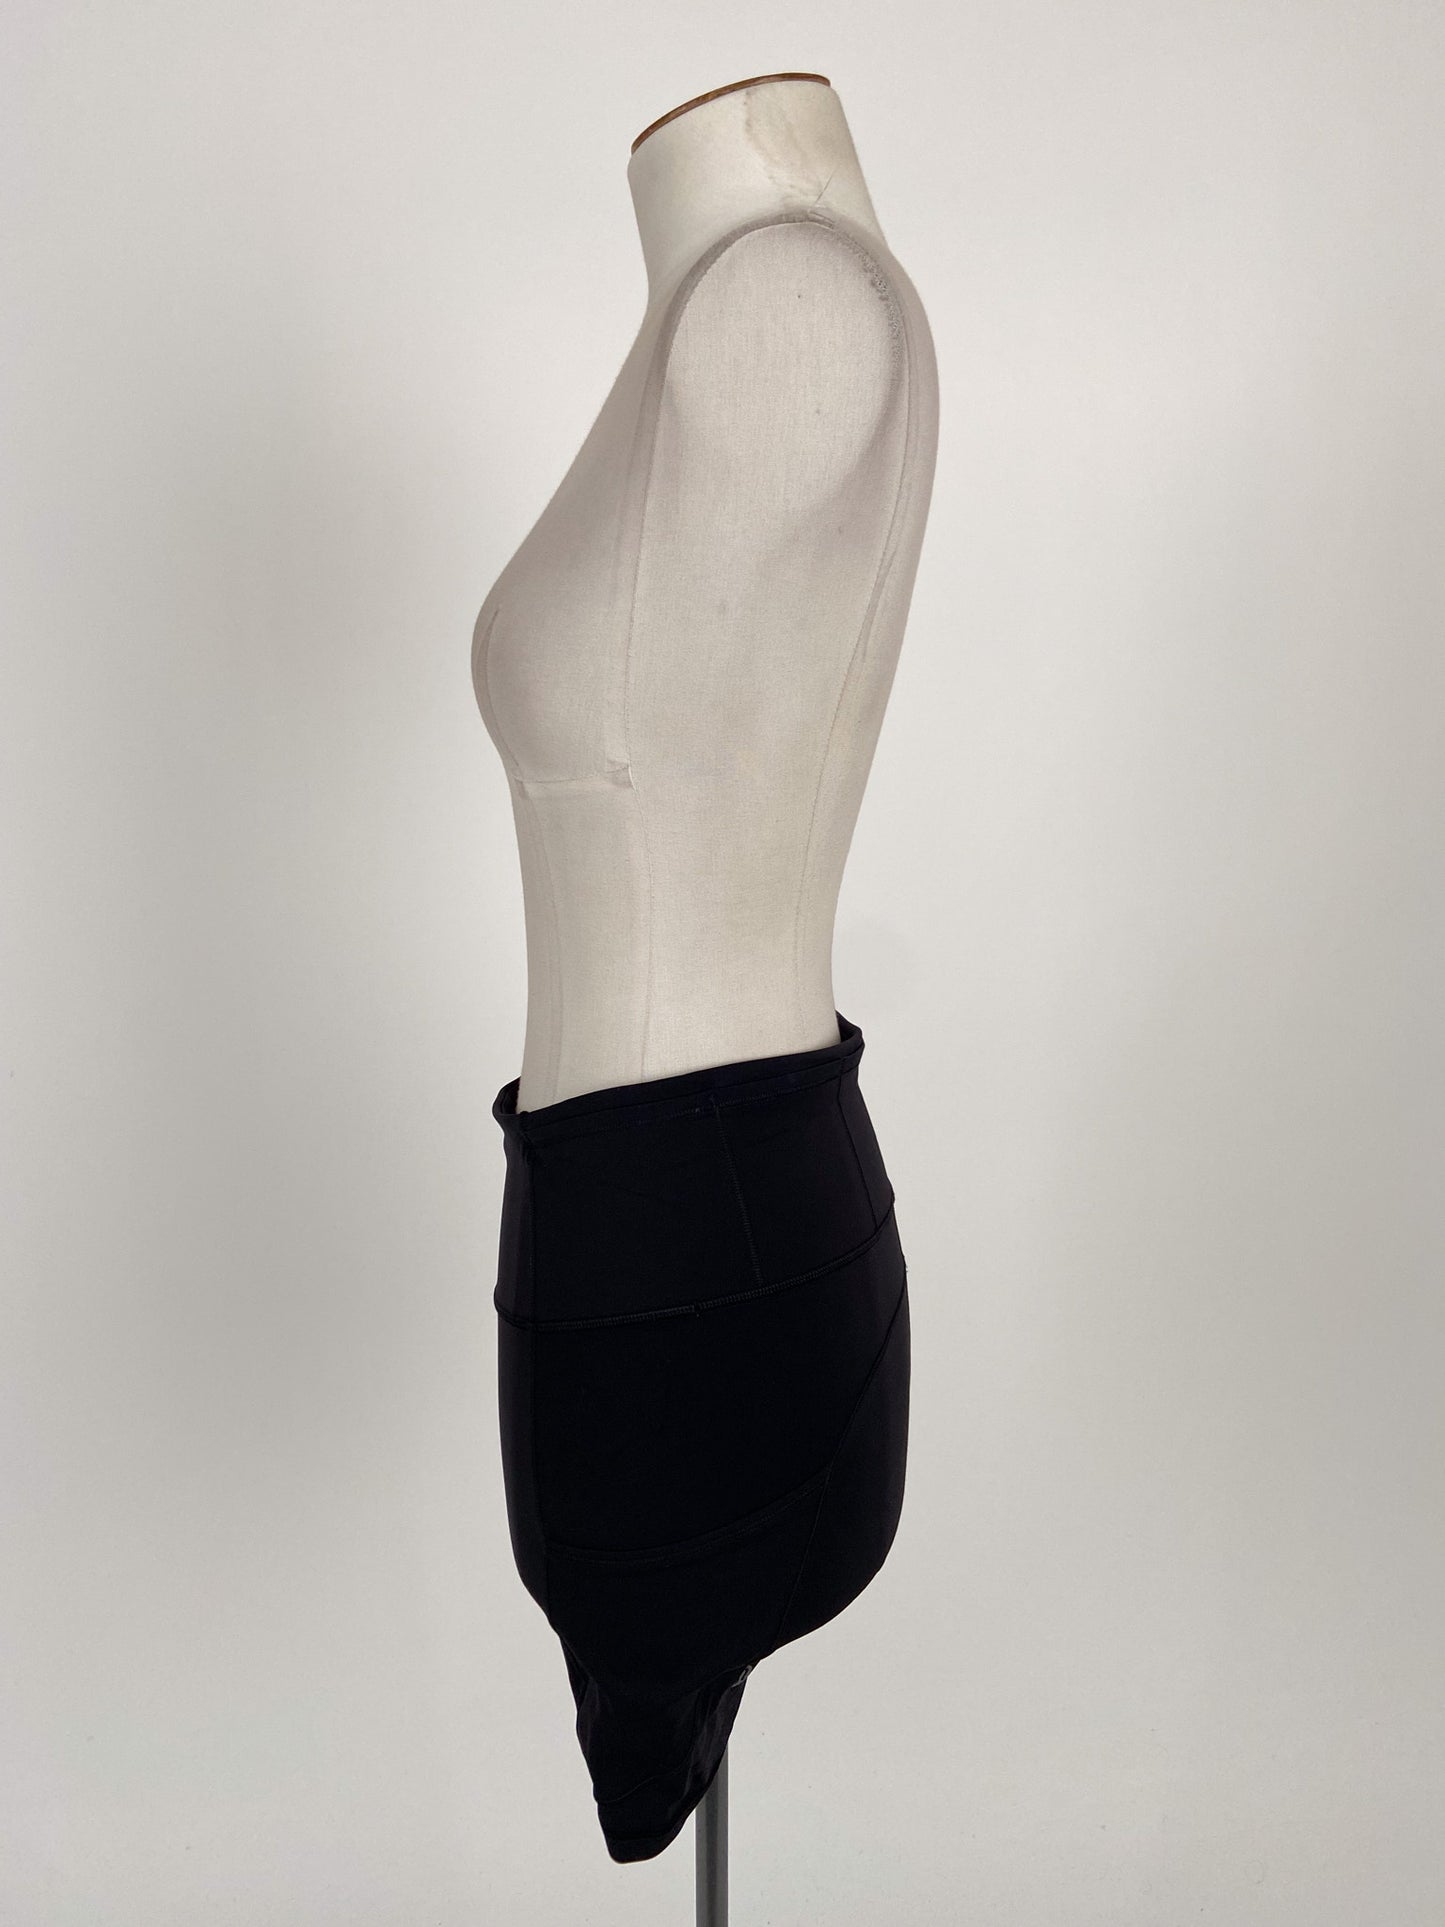 Lululemon | Black Casual Activewear Bottom | Size 10